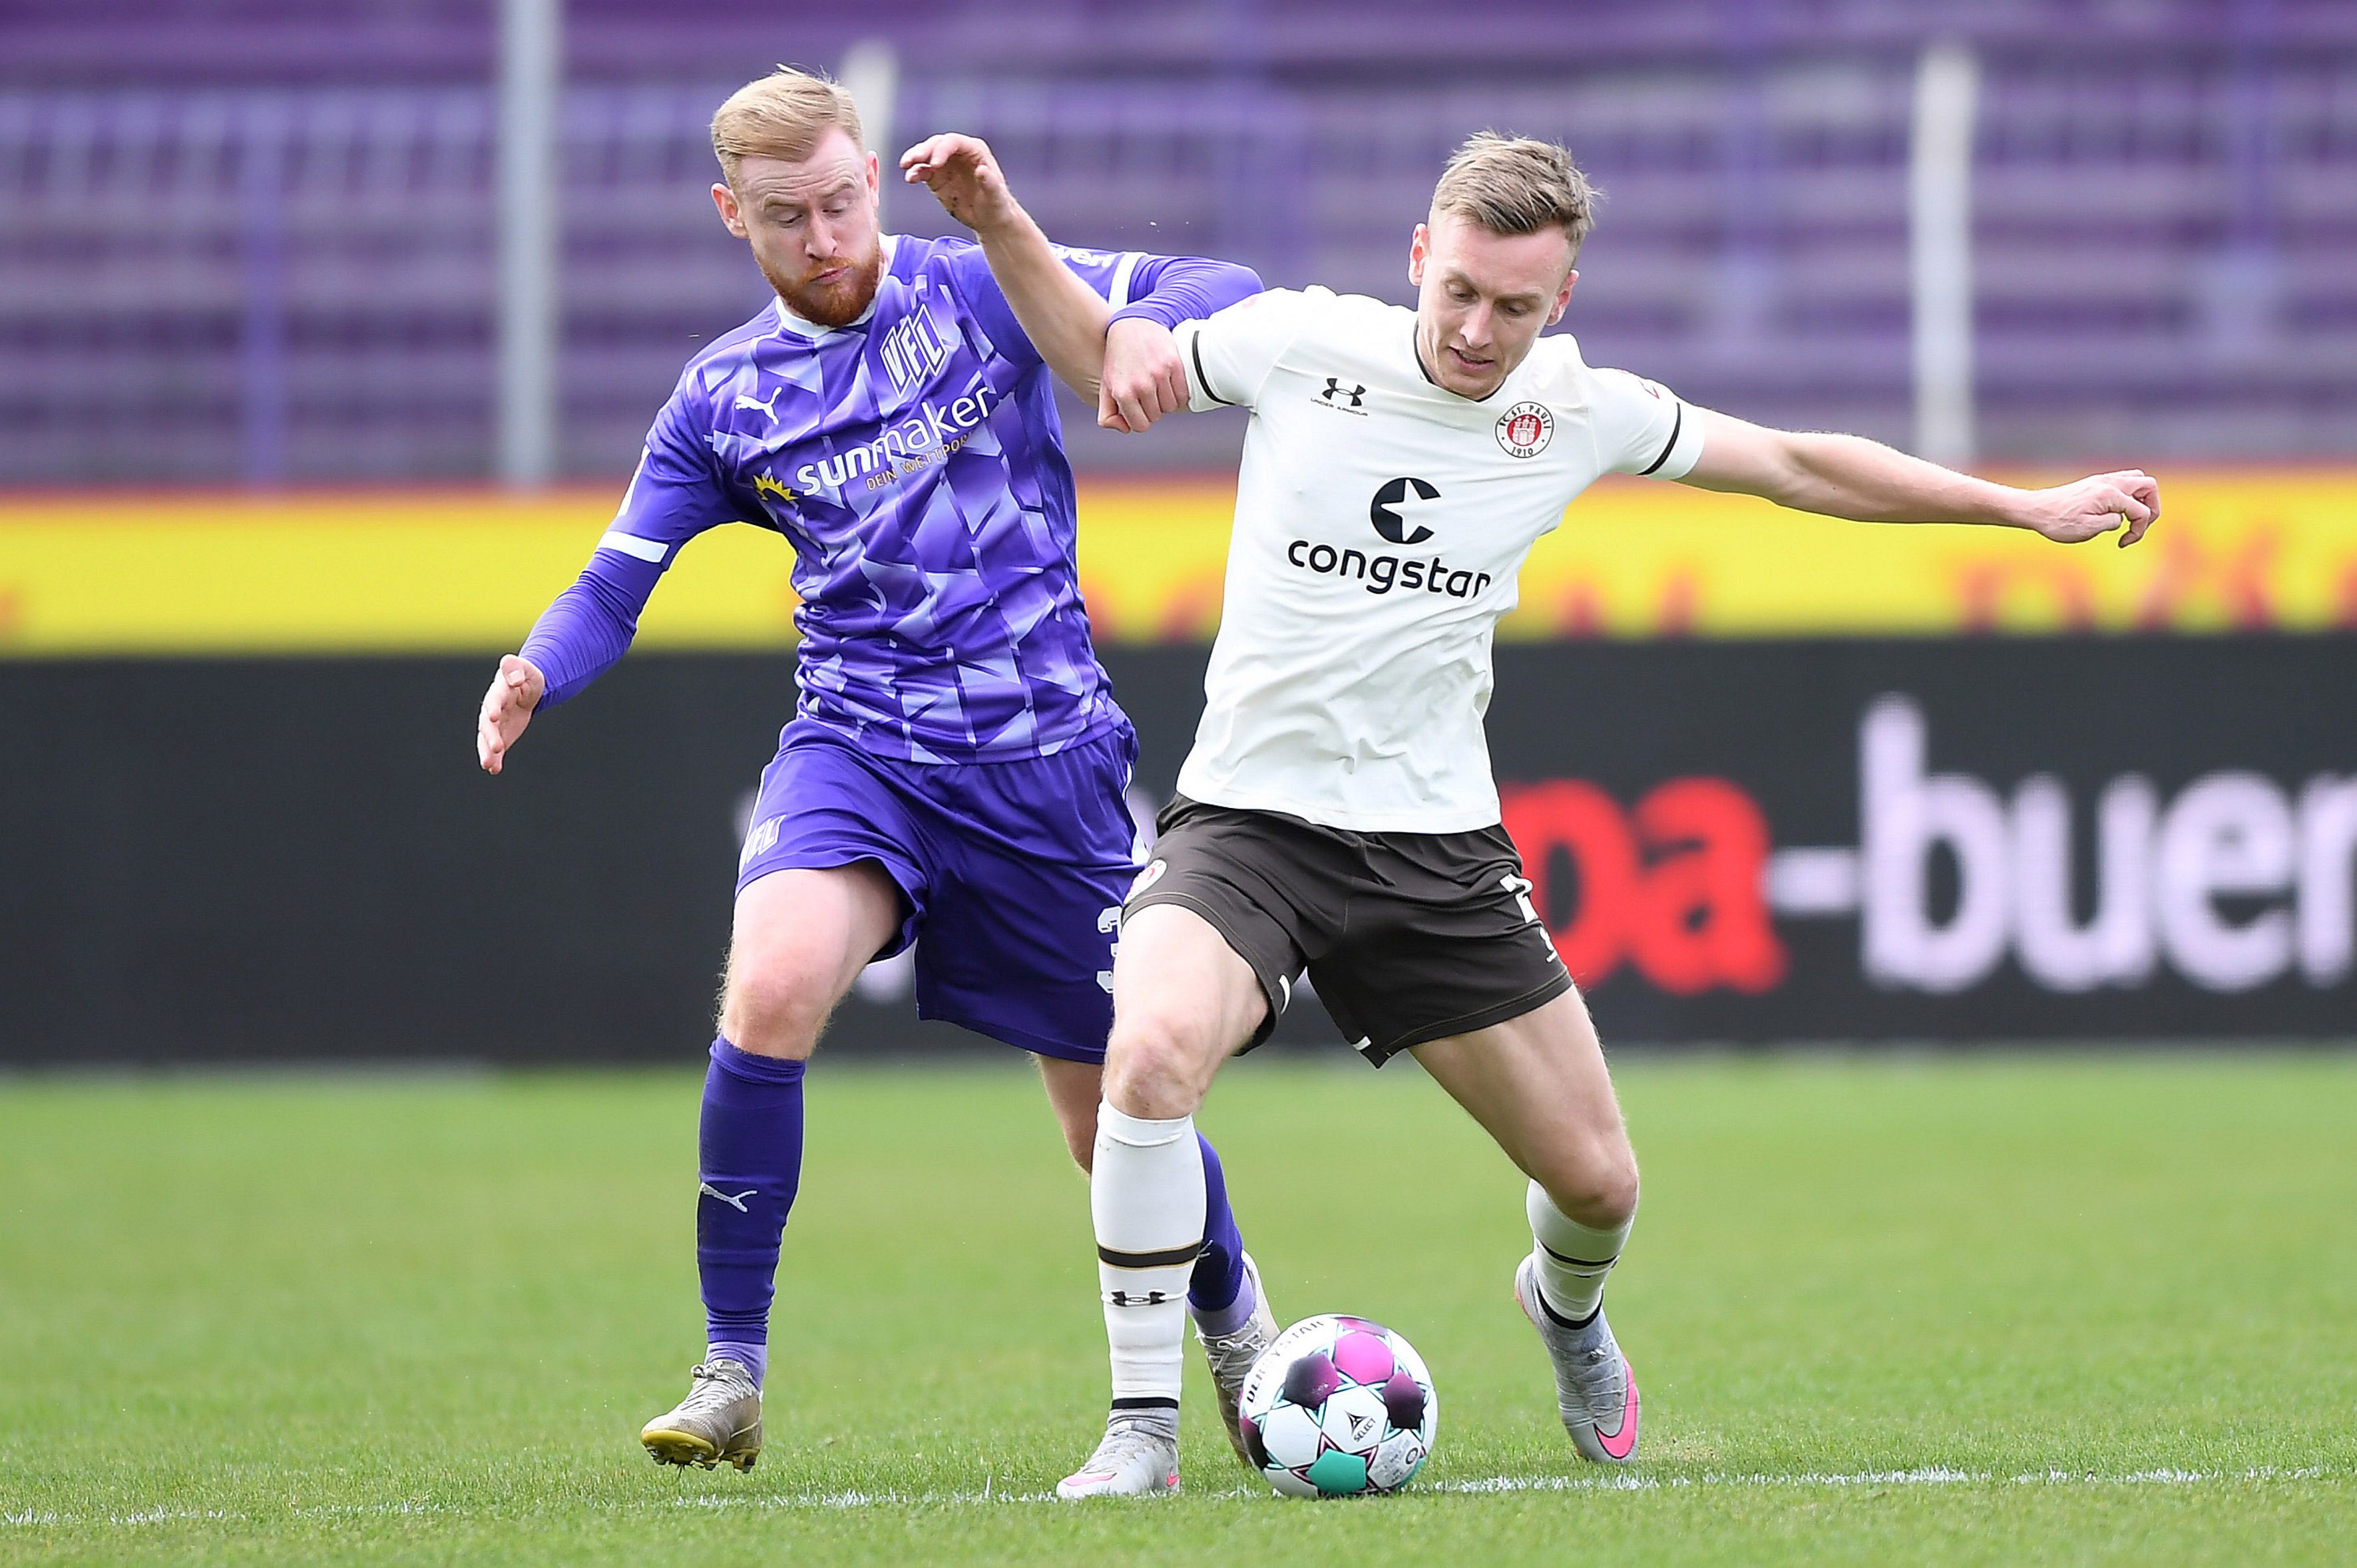 Sebastian Ohlsson under challenge from Osnabrück's Sebastian Kerk on last Bundesliga 2 appearance on 21 March 2021.